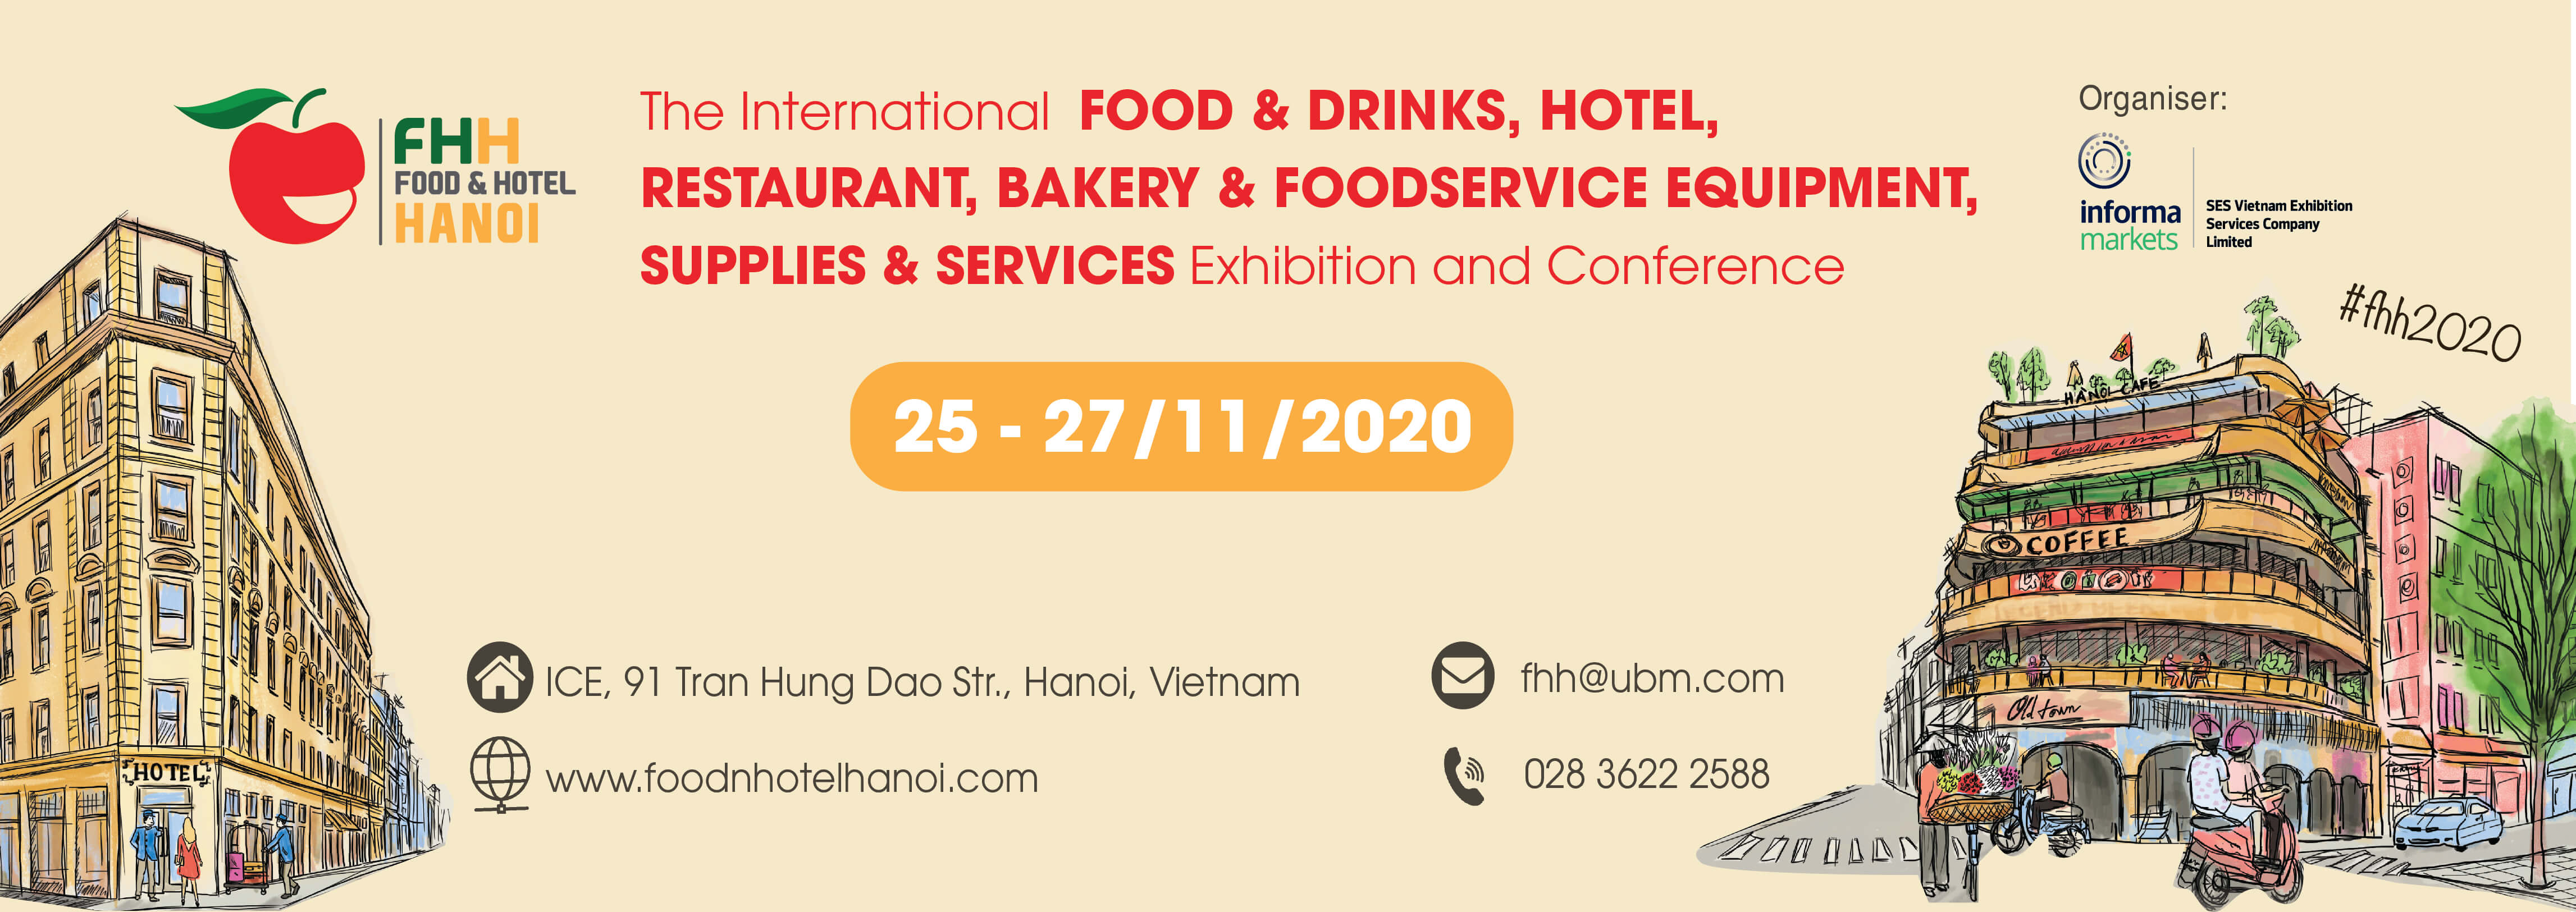 Food Hotel Hanoi 2020